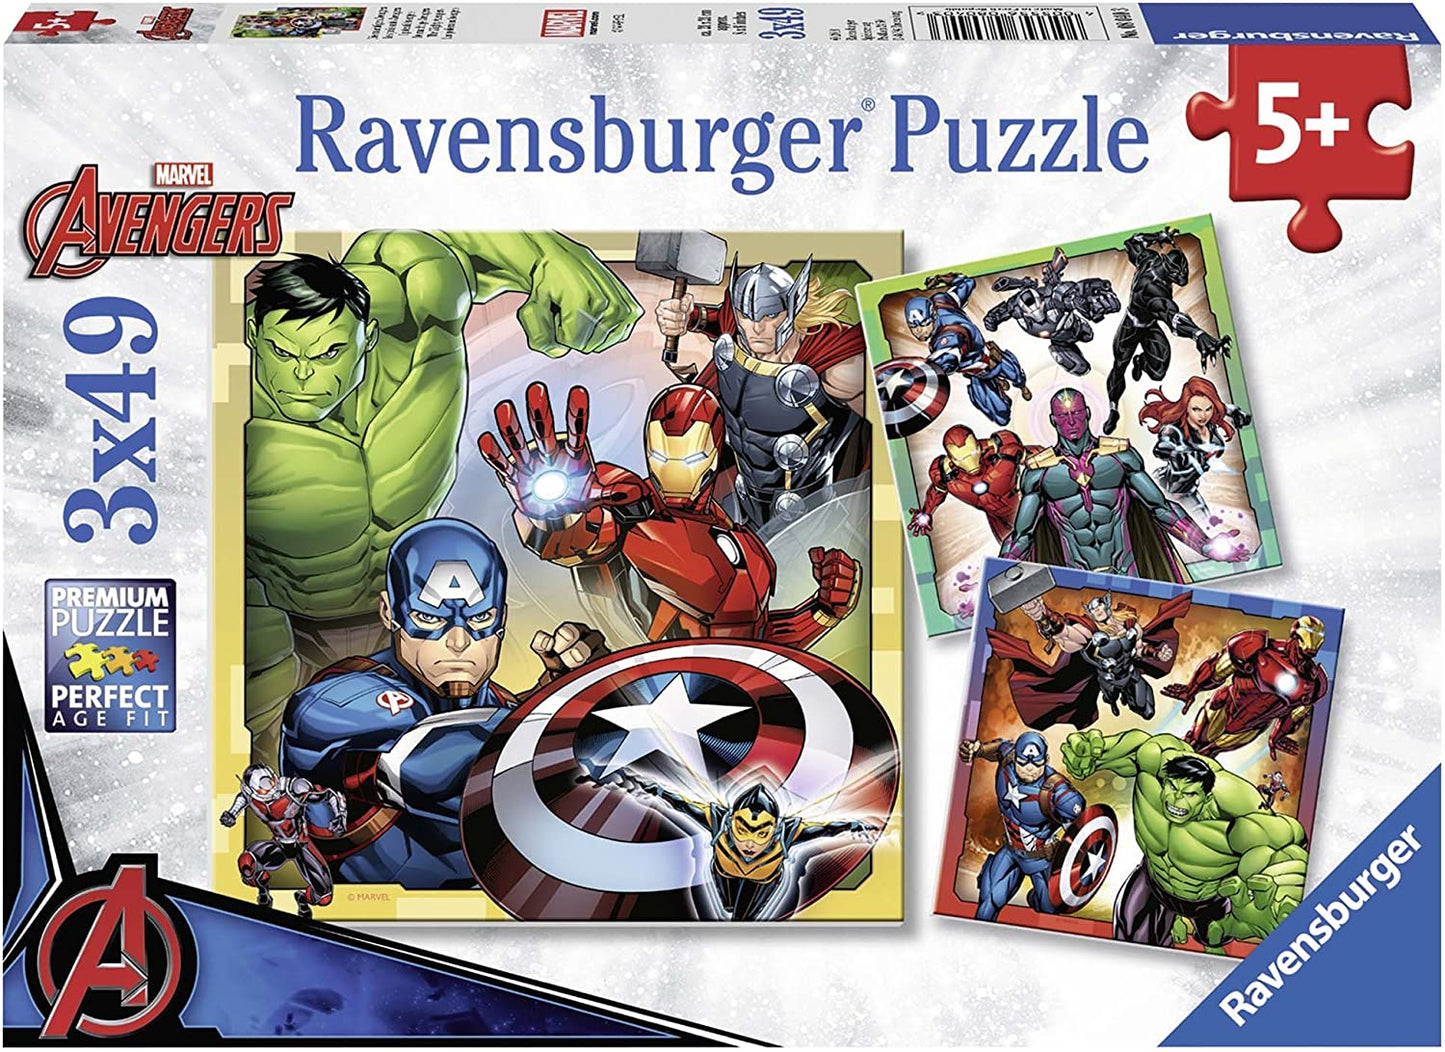 Ravensburger - Avengers Assemble - 3 x 49 Piece Jigsaw Puzzles